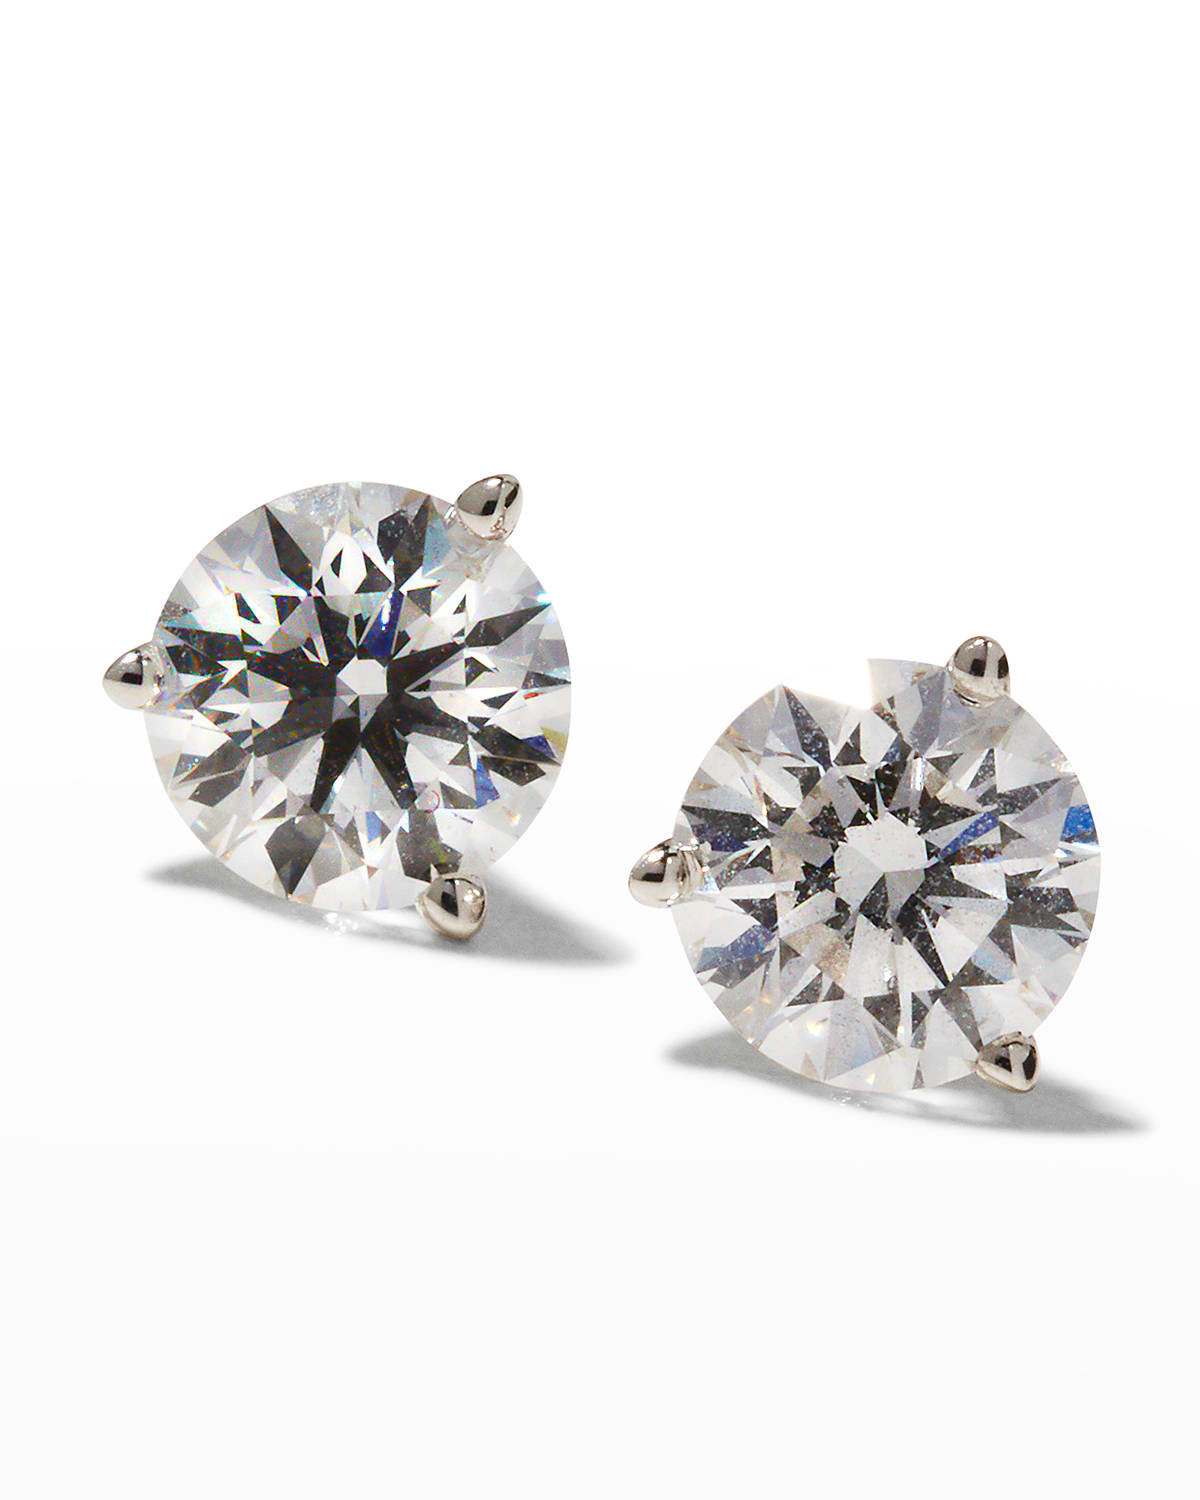 NM Diamond Collection 18k White Gold Diamond Stud Earrings, 2tcw